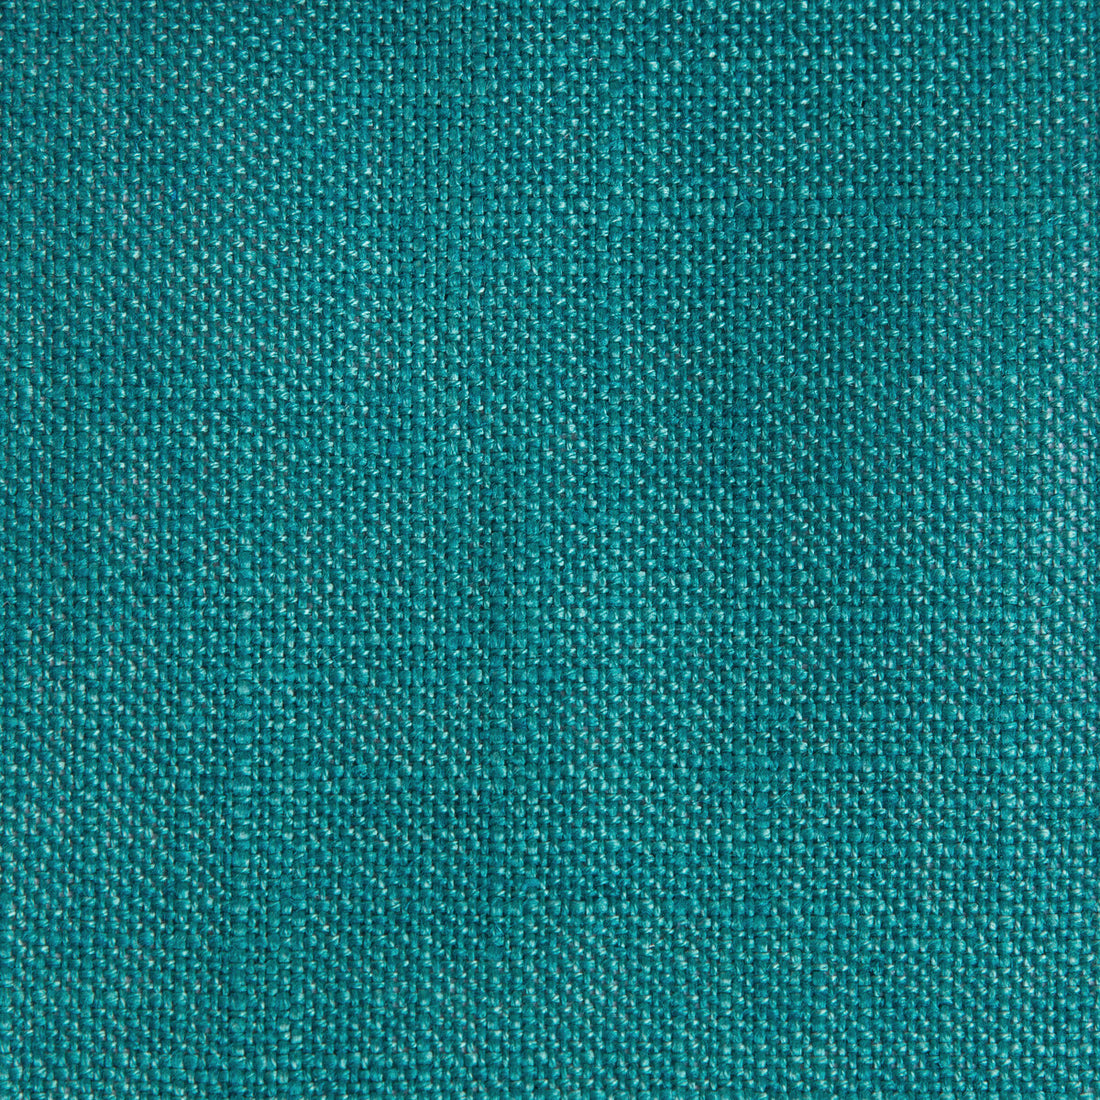 Peru fabric in turquesa color - pattern GDT5548.015.0 - by Gaston y Daniela in the Gaston Nuevo Mundo collection